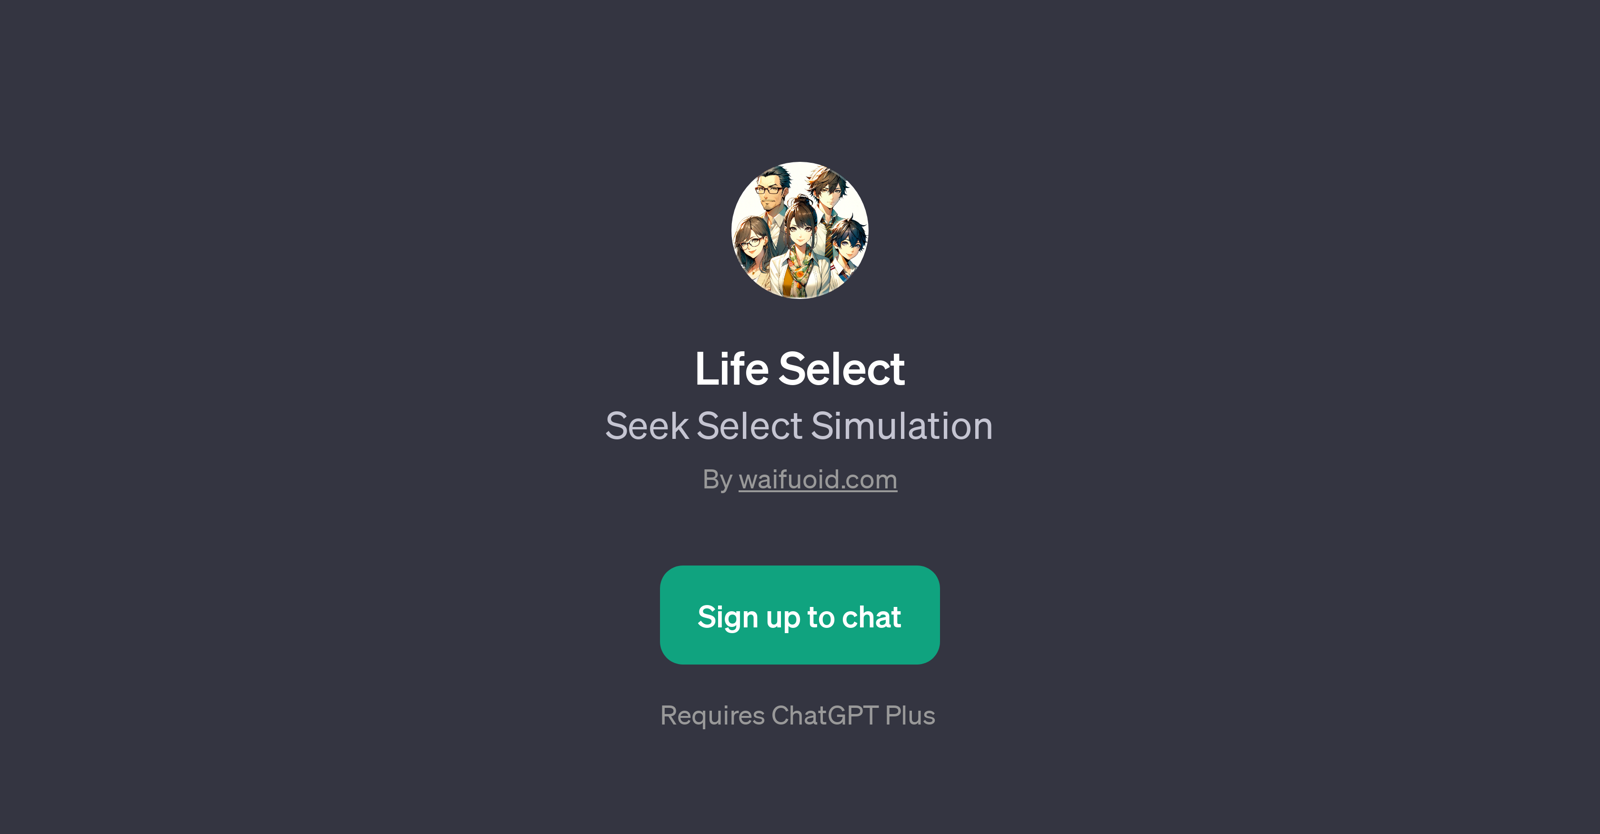 Life Select website